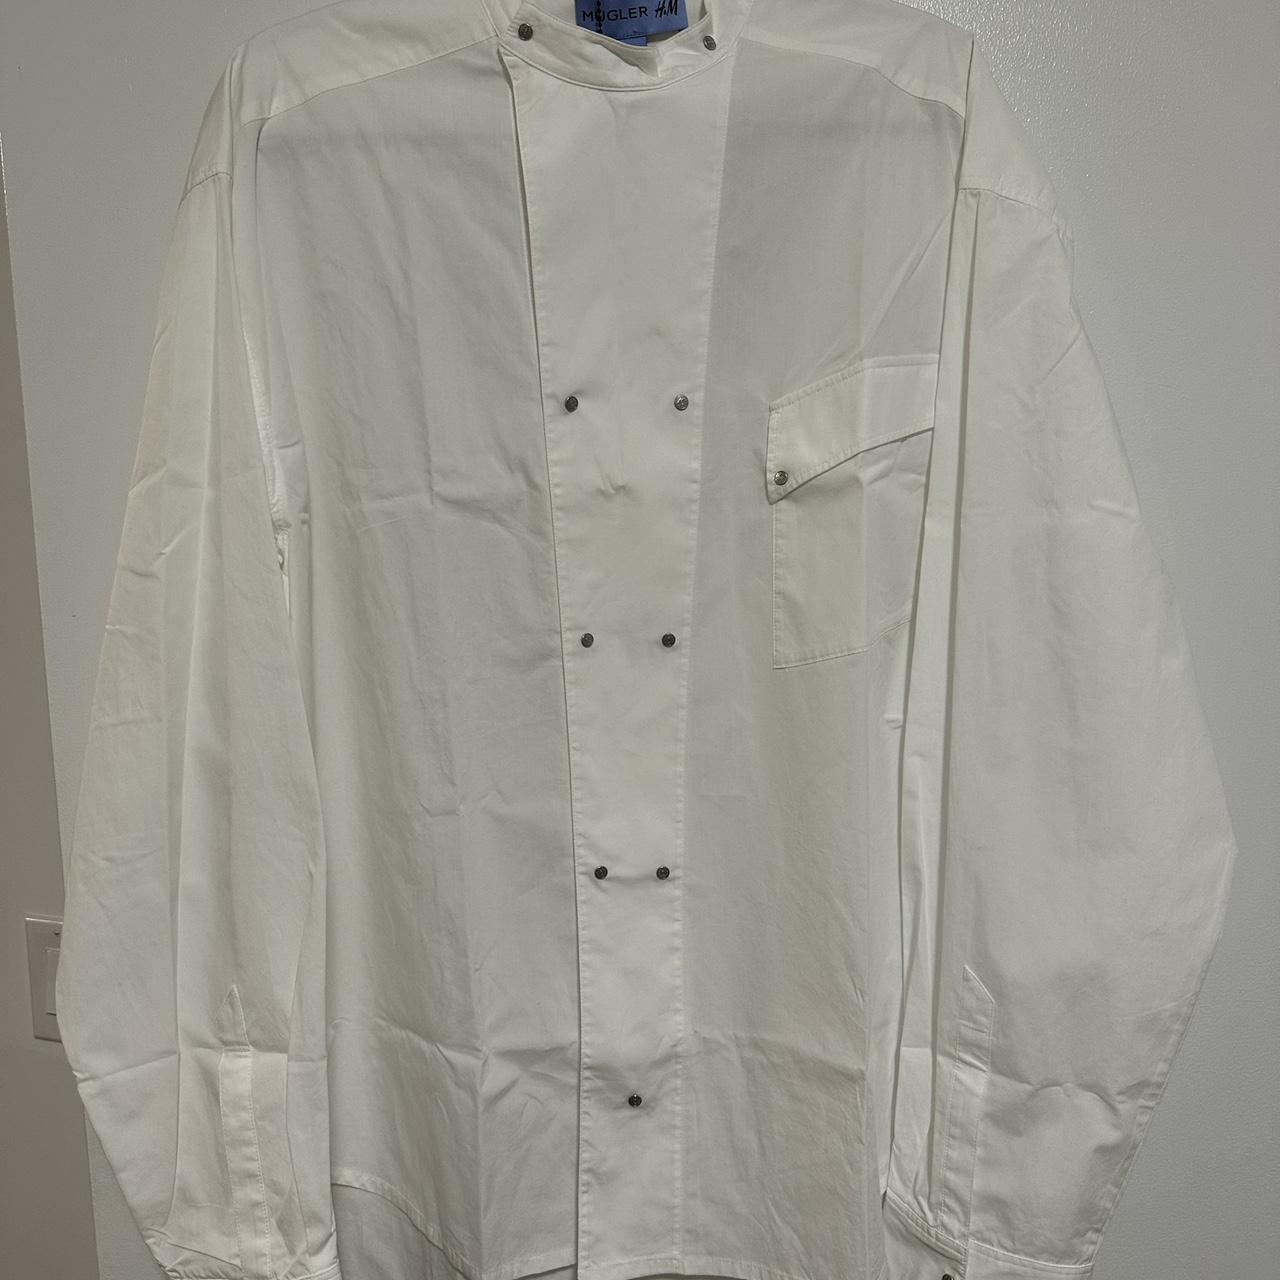 Thierry Mugler Men's White Shirt | Depop